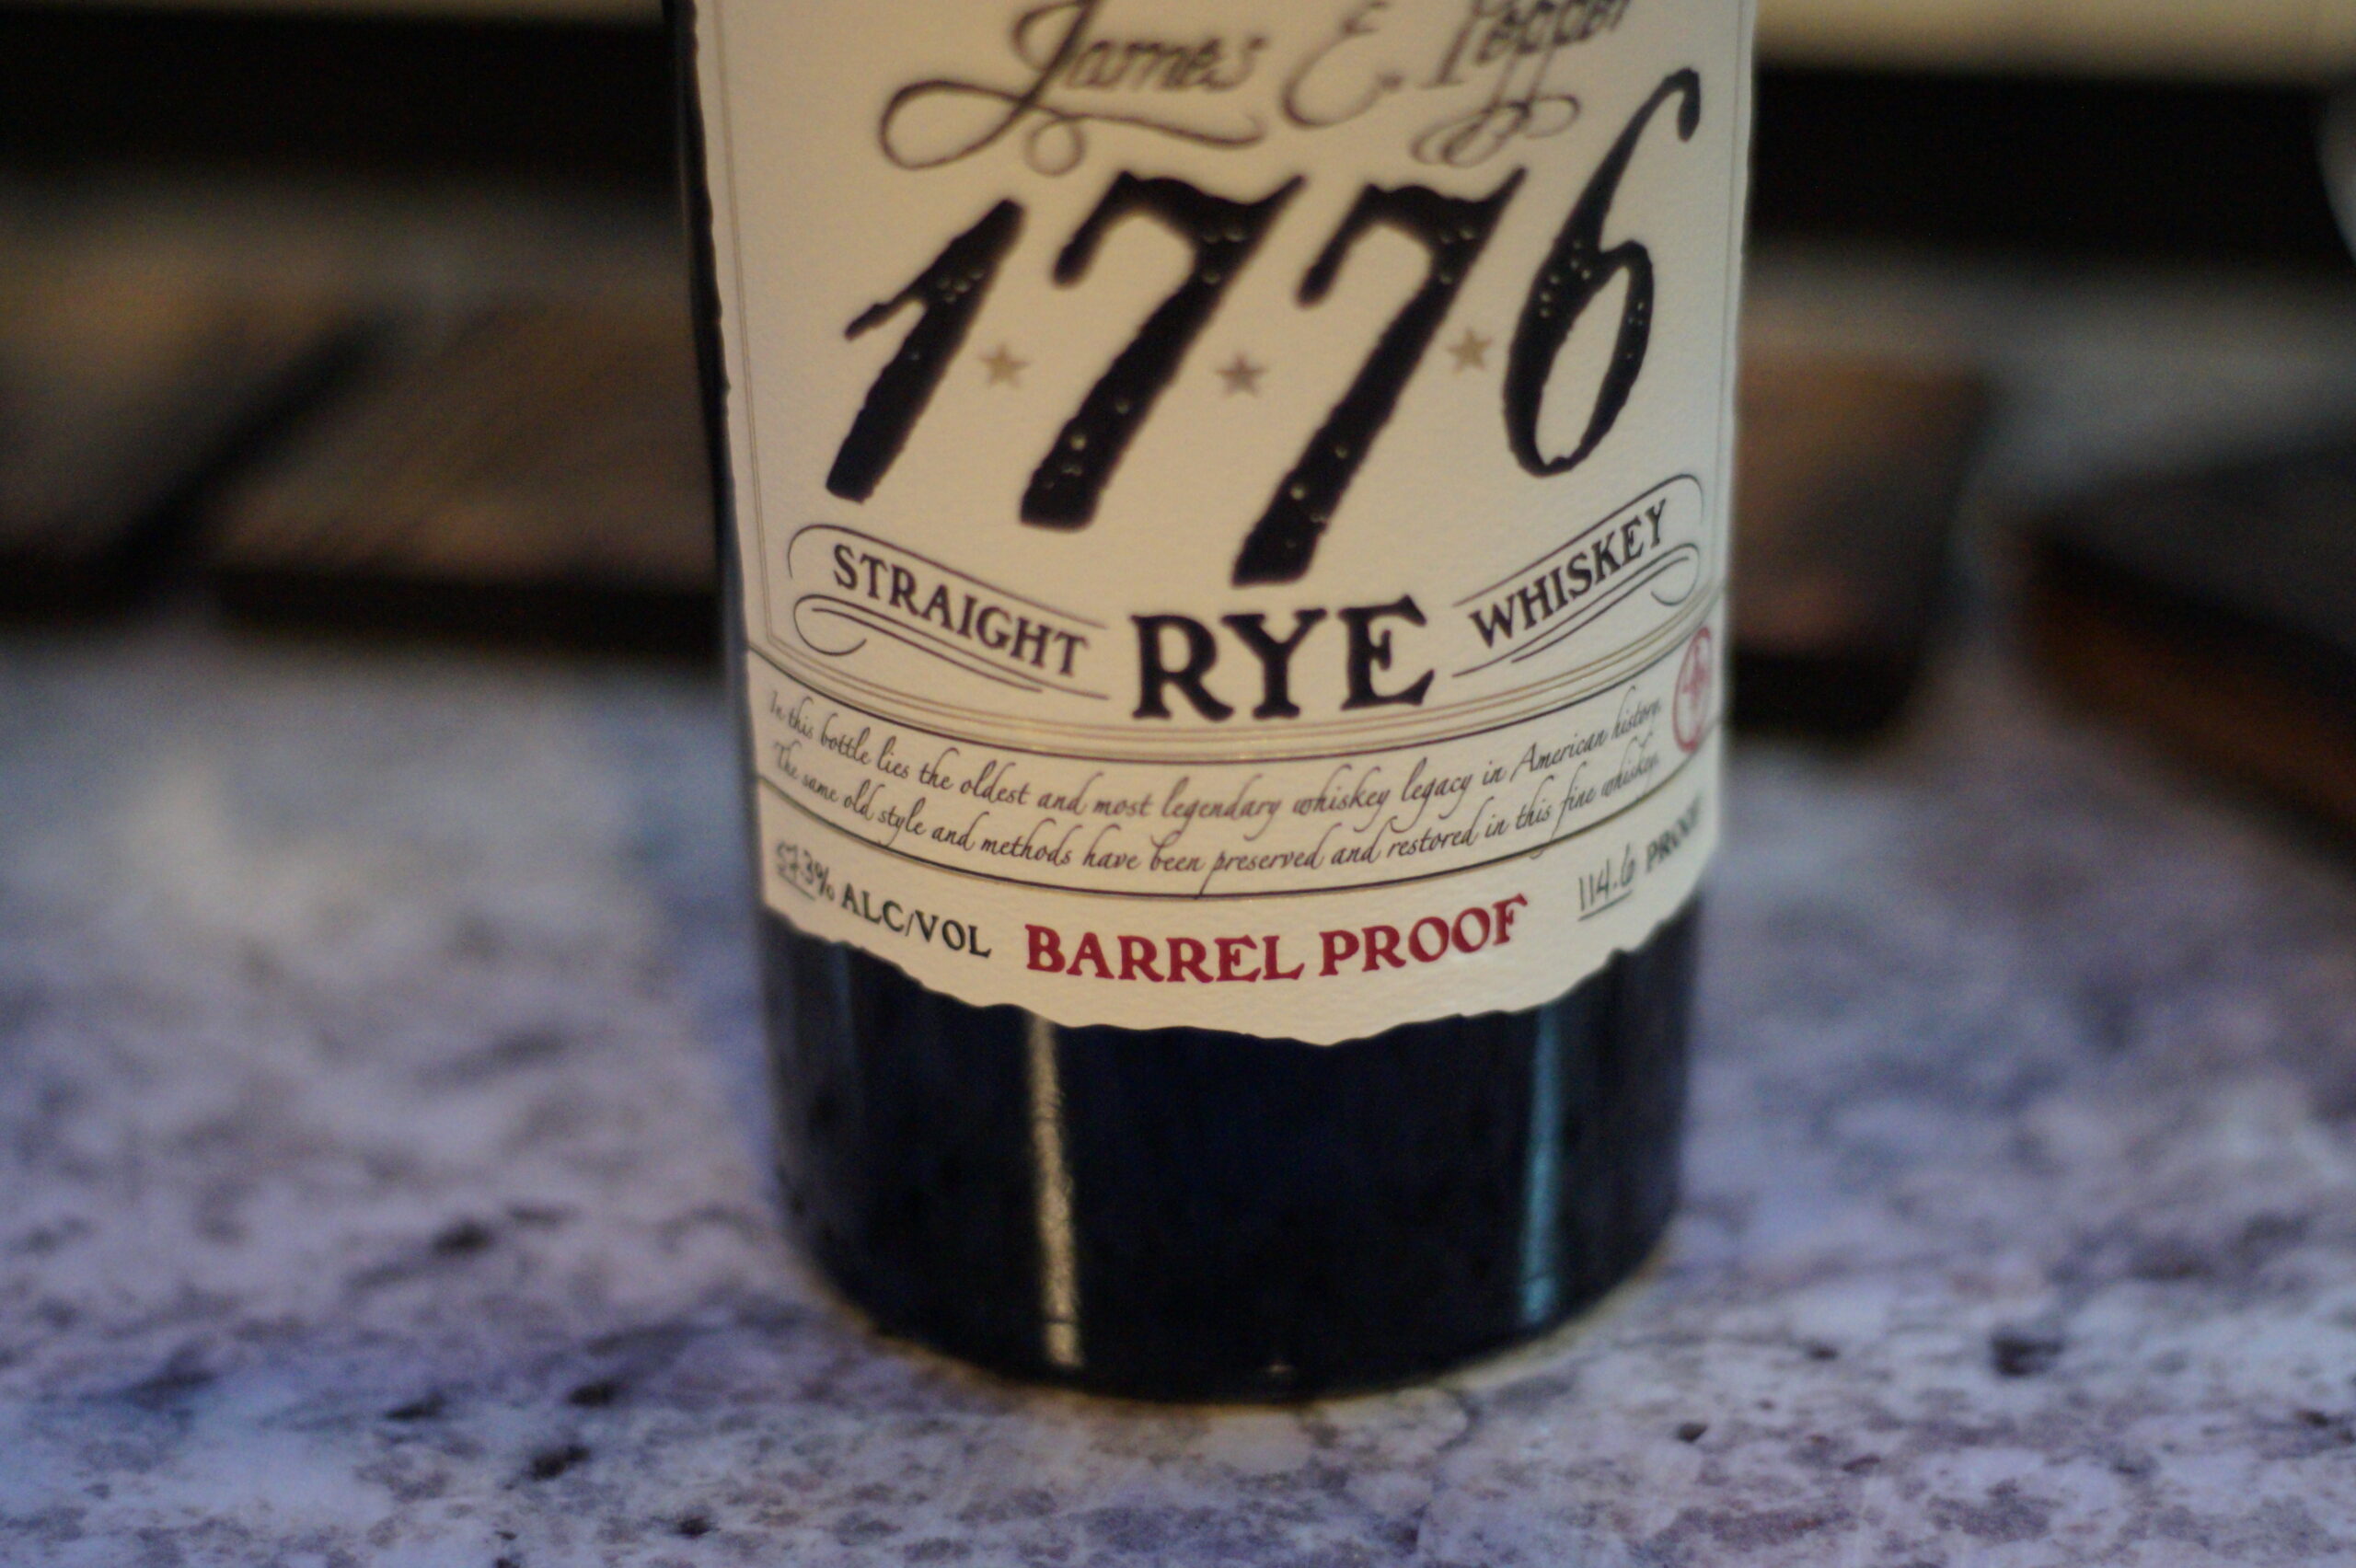 James E. Pepper 1776 Barrel Proof Rye Whiskey Review – ModernThirst